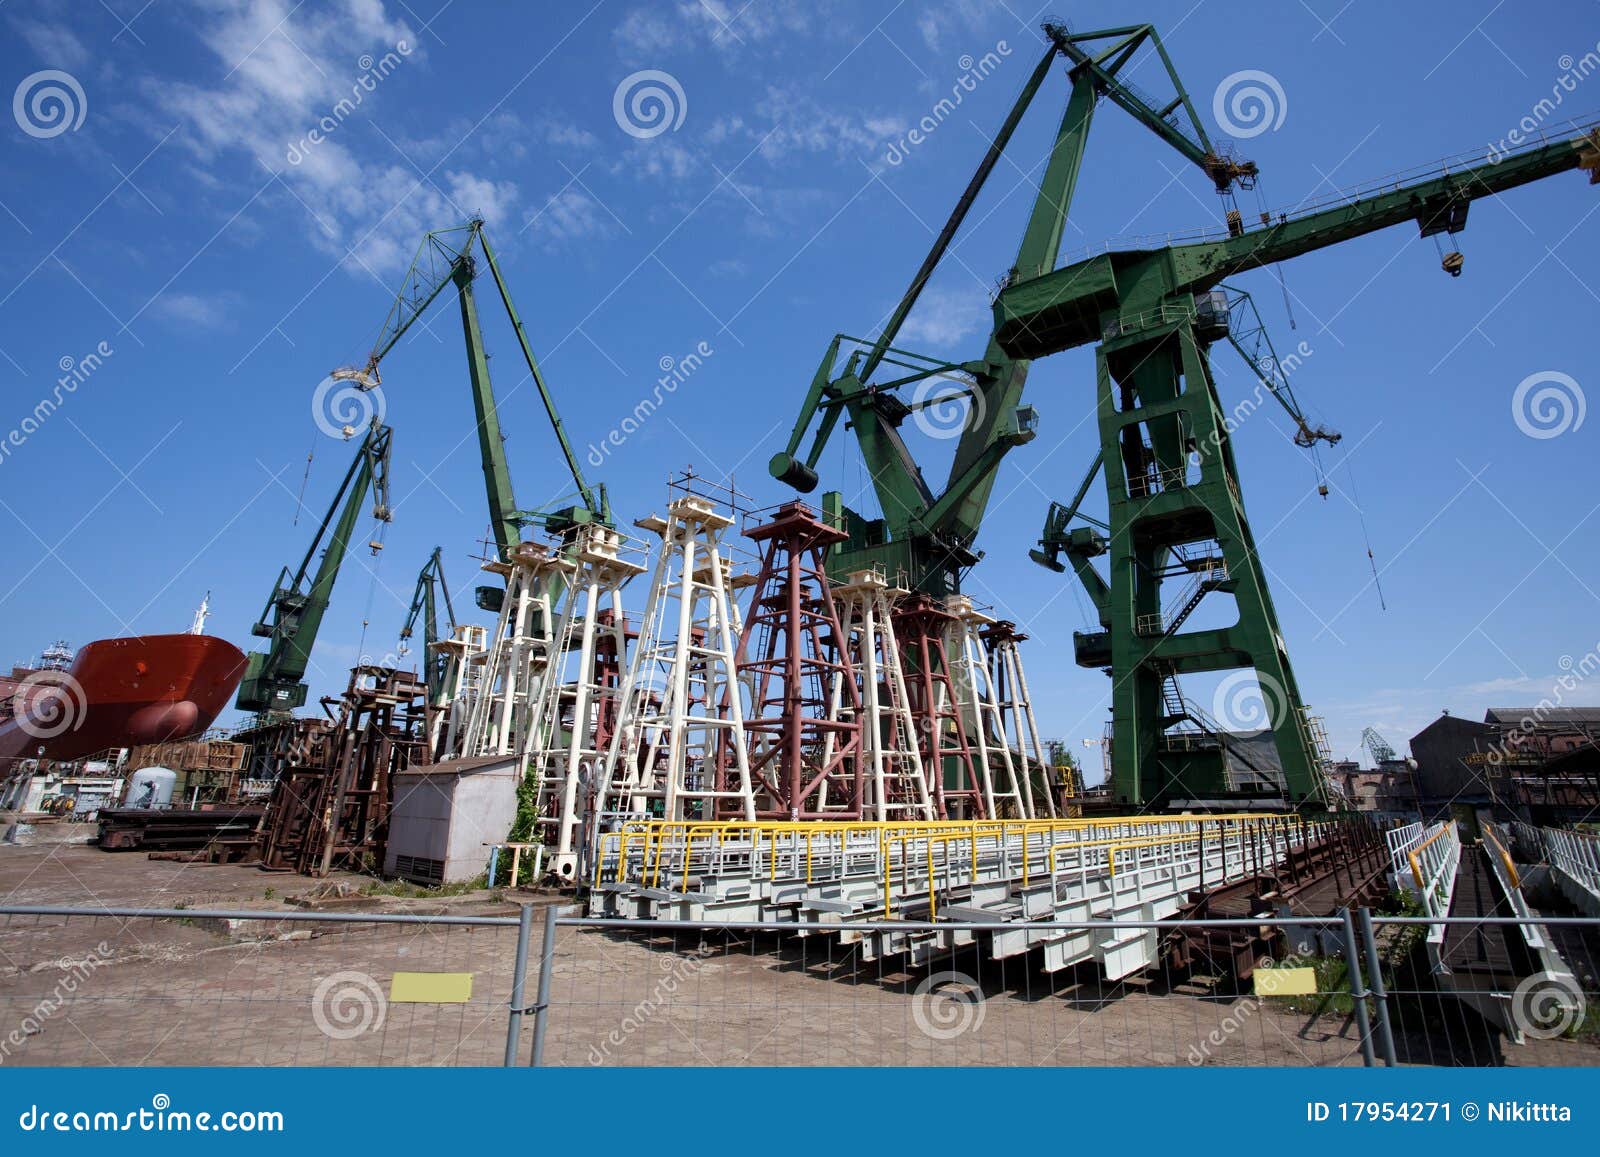 construction site in gdansk shipyard